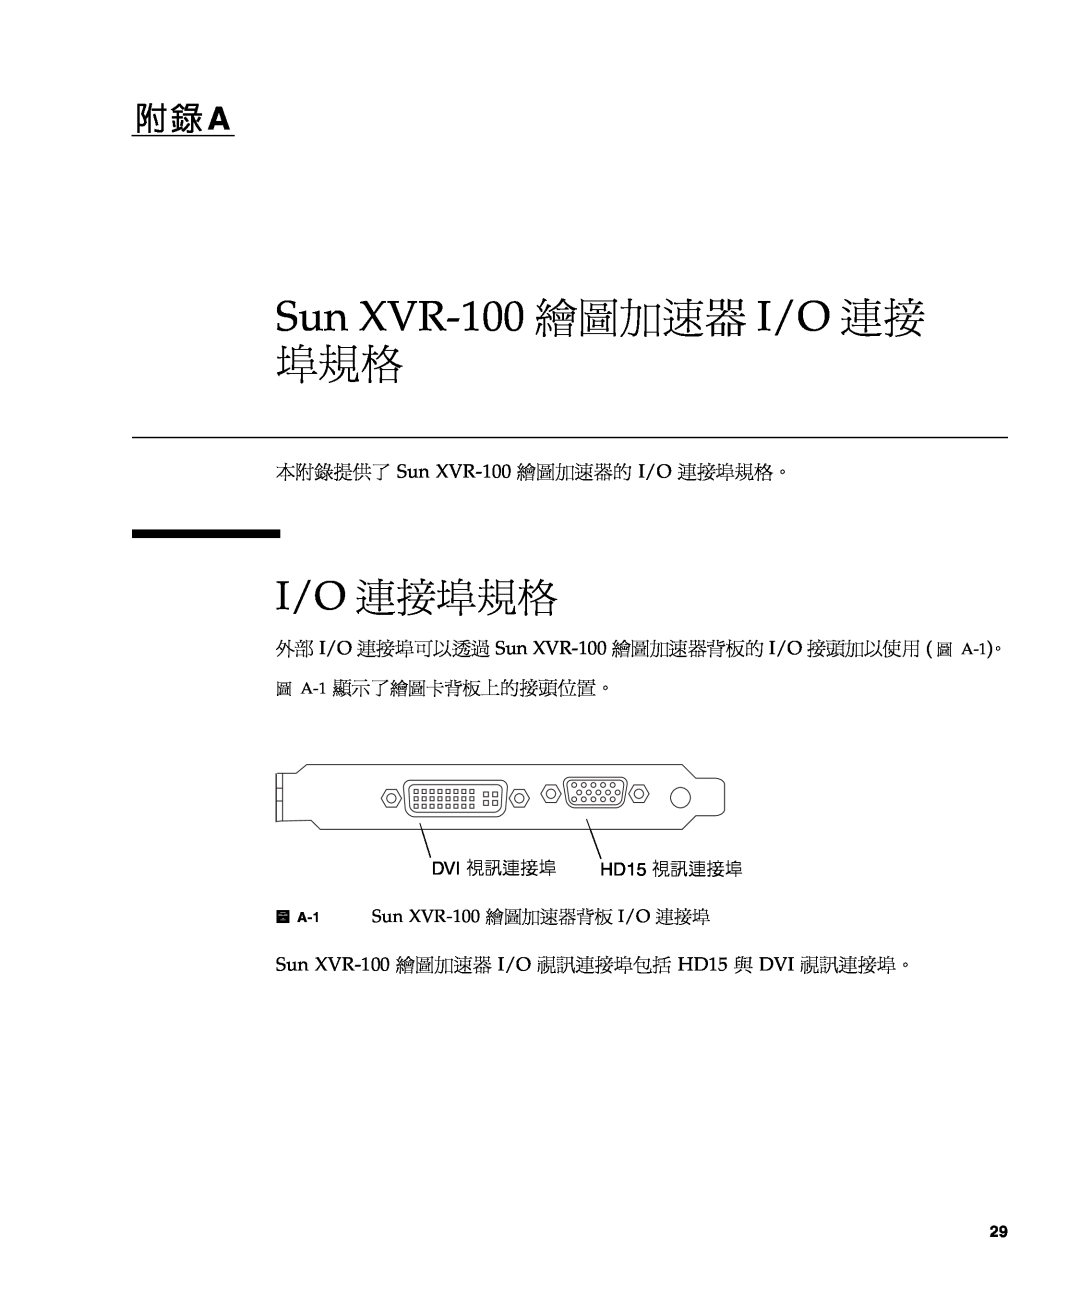 Sun Microsystems manual Sun XVR-100 繪圖加速器 I/O 連接, 附 錄 A, 本附錄提供了 Sun XVR-100 繪圖加速器的 I/O 連接埠規格。, 圖 A-1 顯示了繪圖卡背板上的接頭位置。 